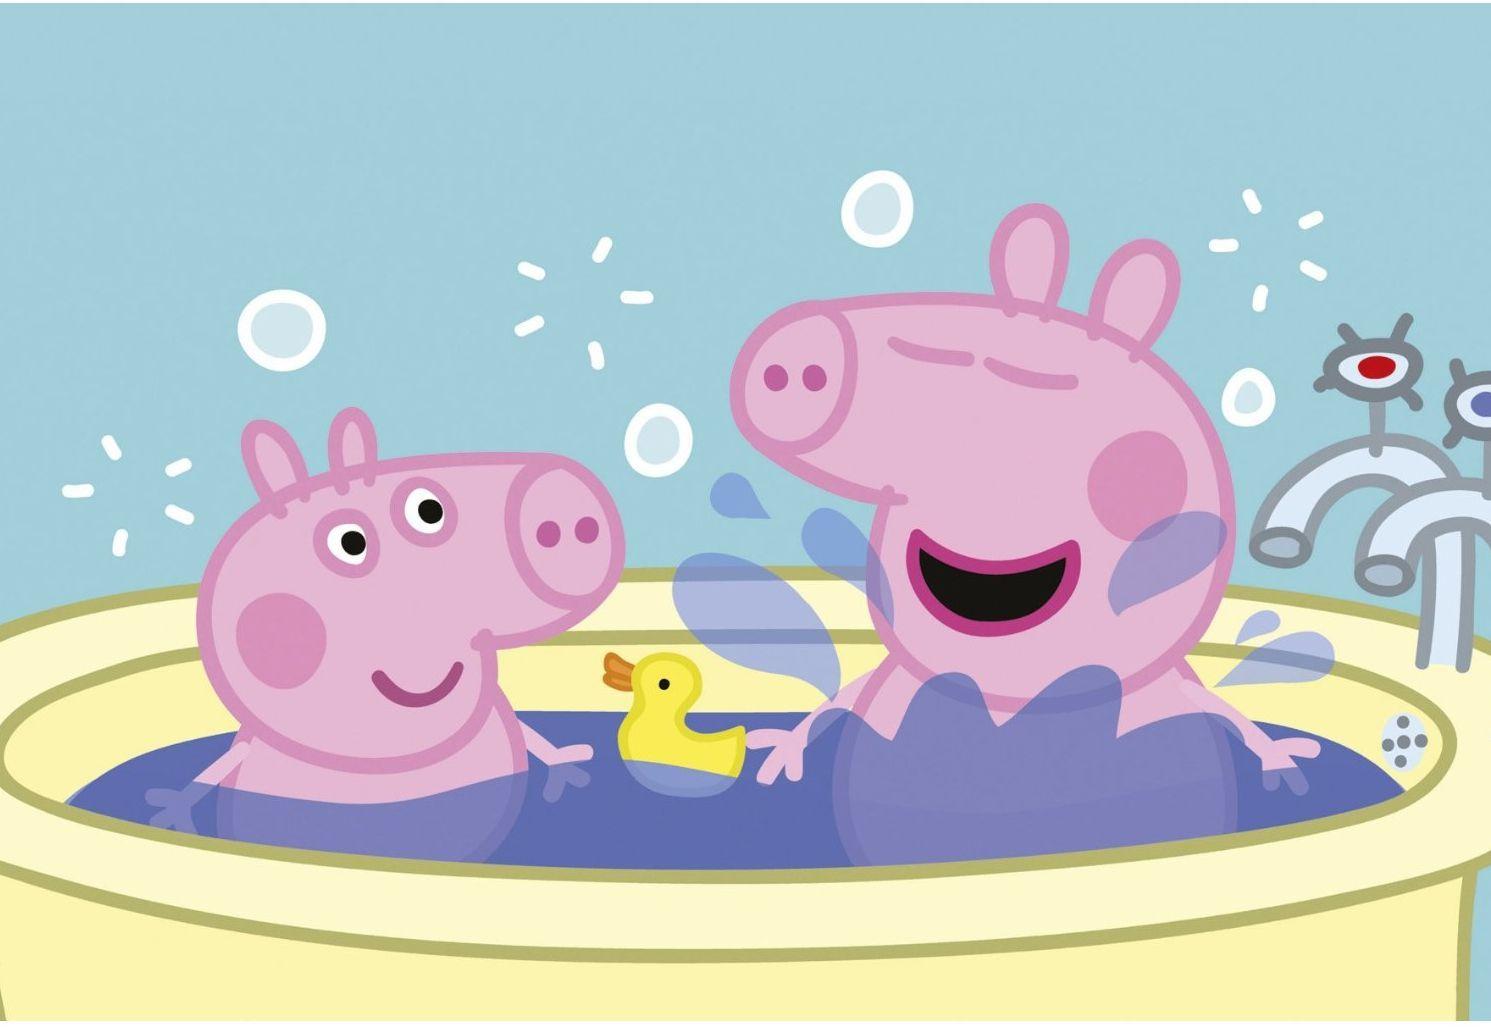 Peppa Pig Cartoon Image Wallpaper. Fairy Tales / Cartoon